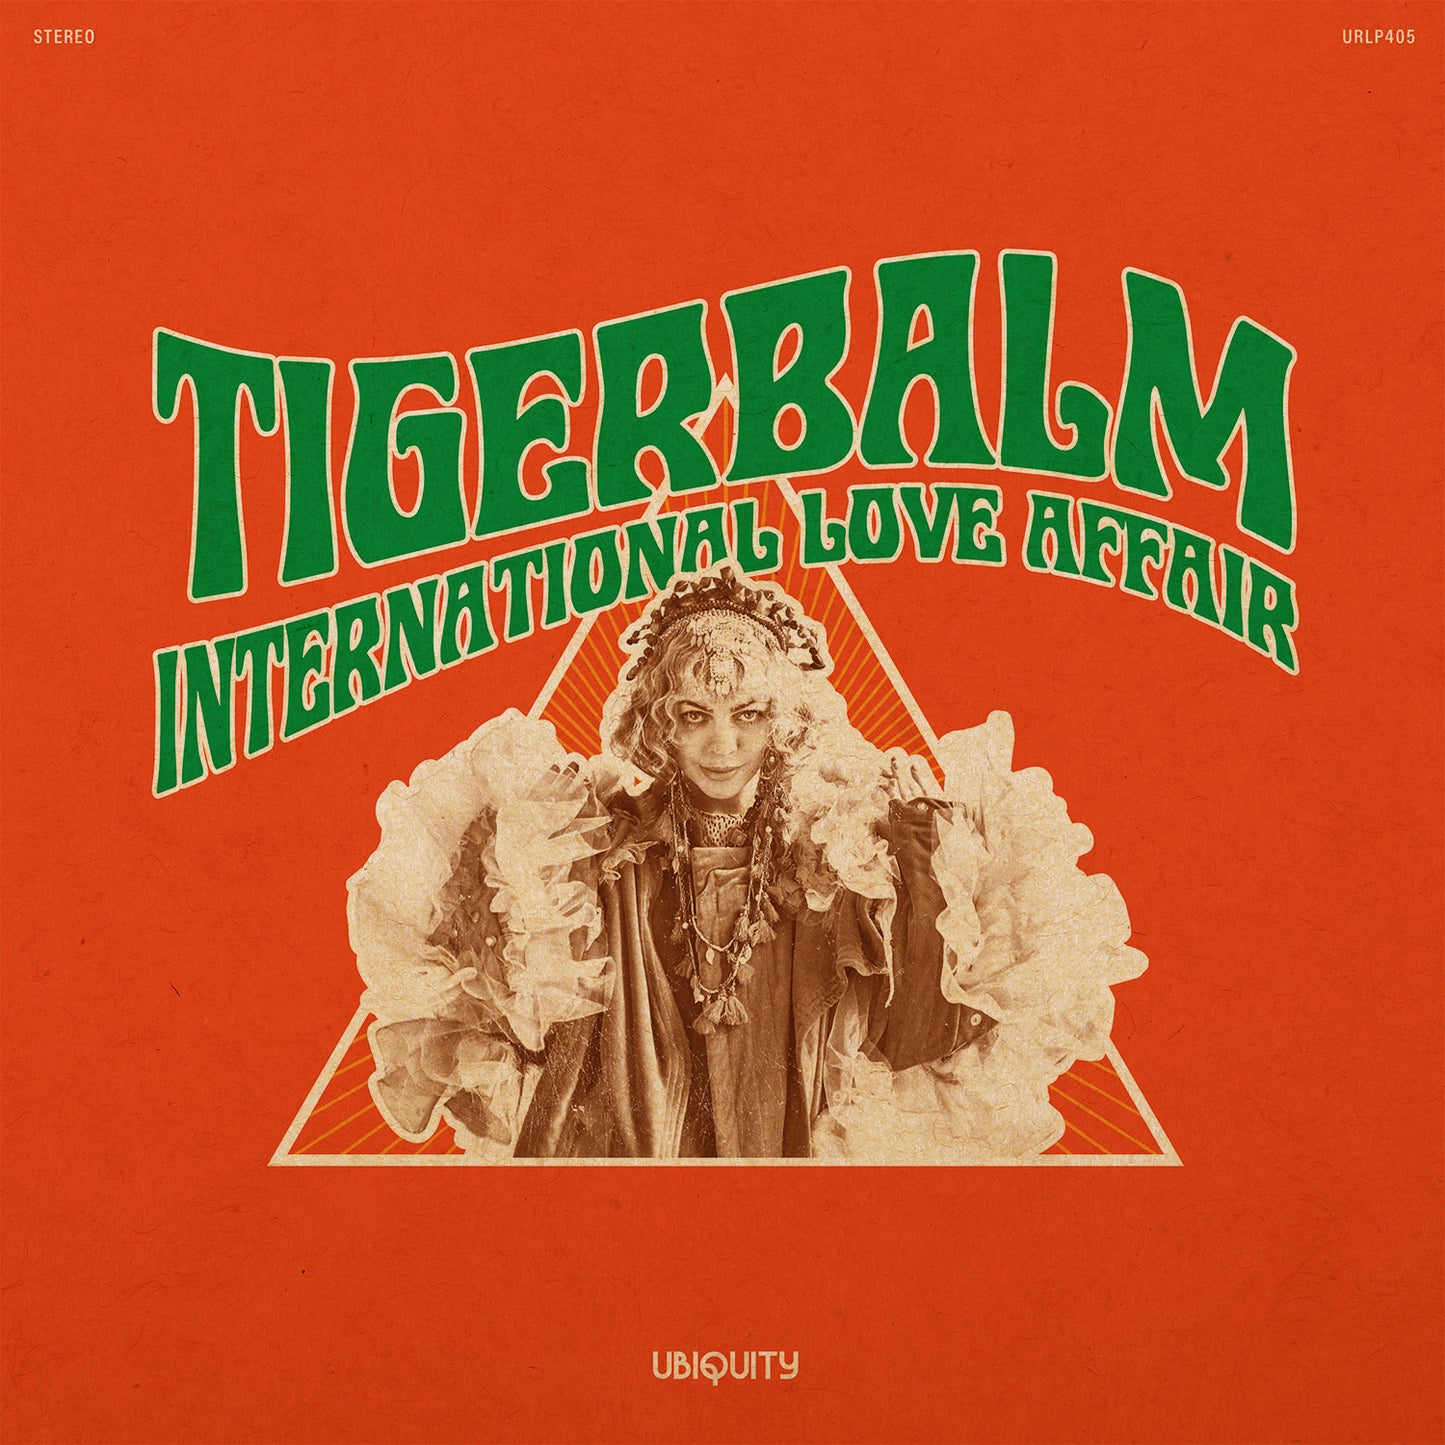 Tigerbalm "International Love Affair" Double LP